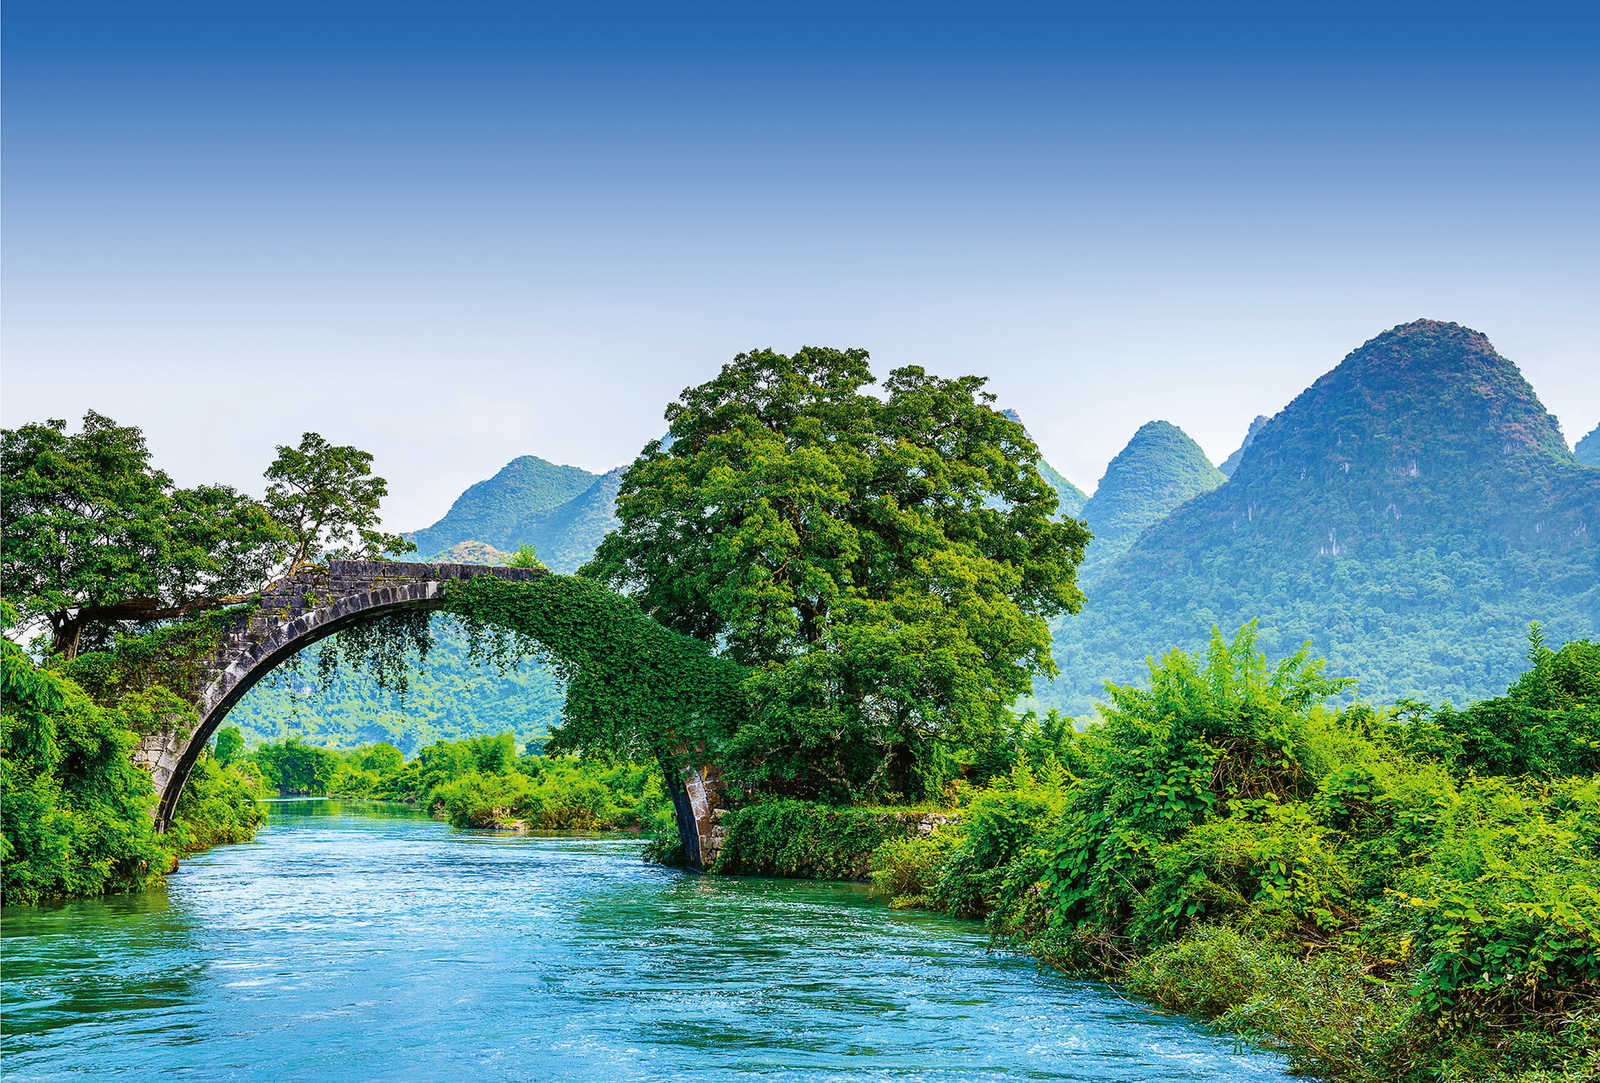 Fotomurali Cina rurale, montagne, fiume e ponte
